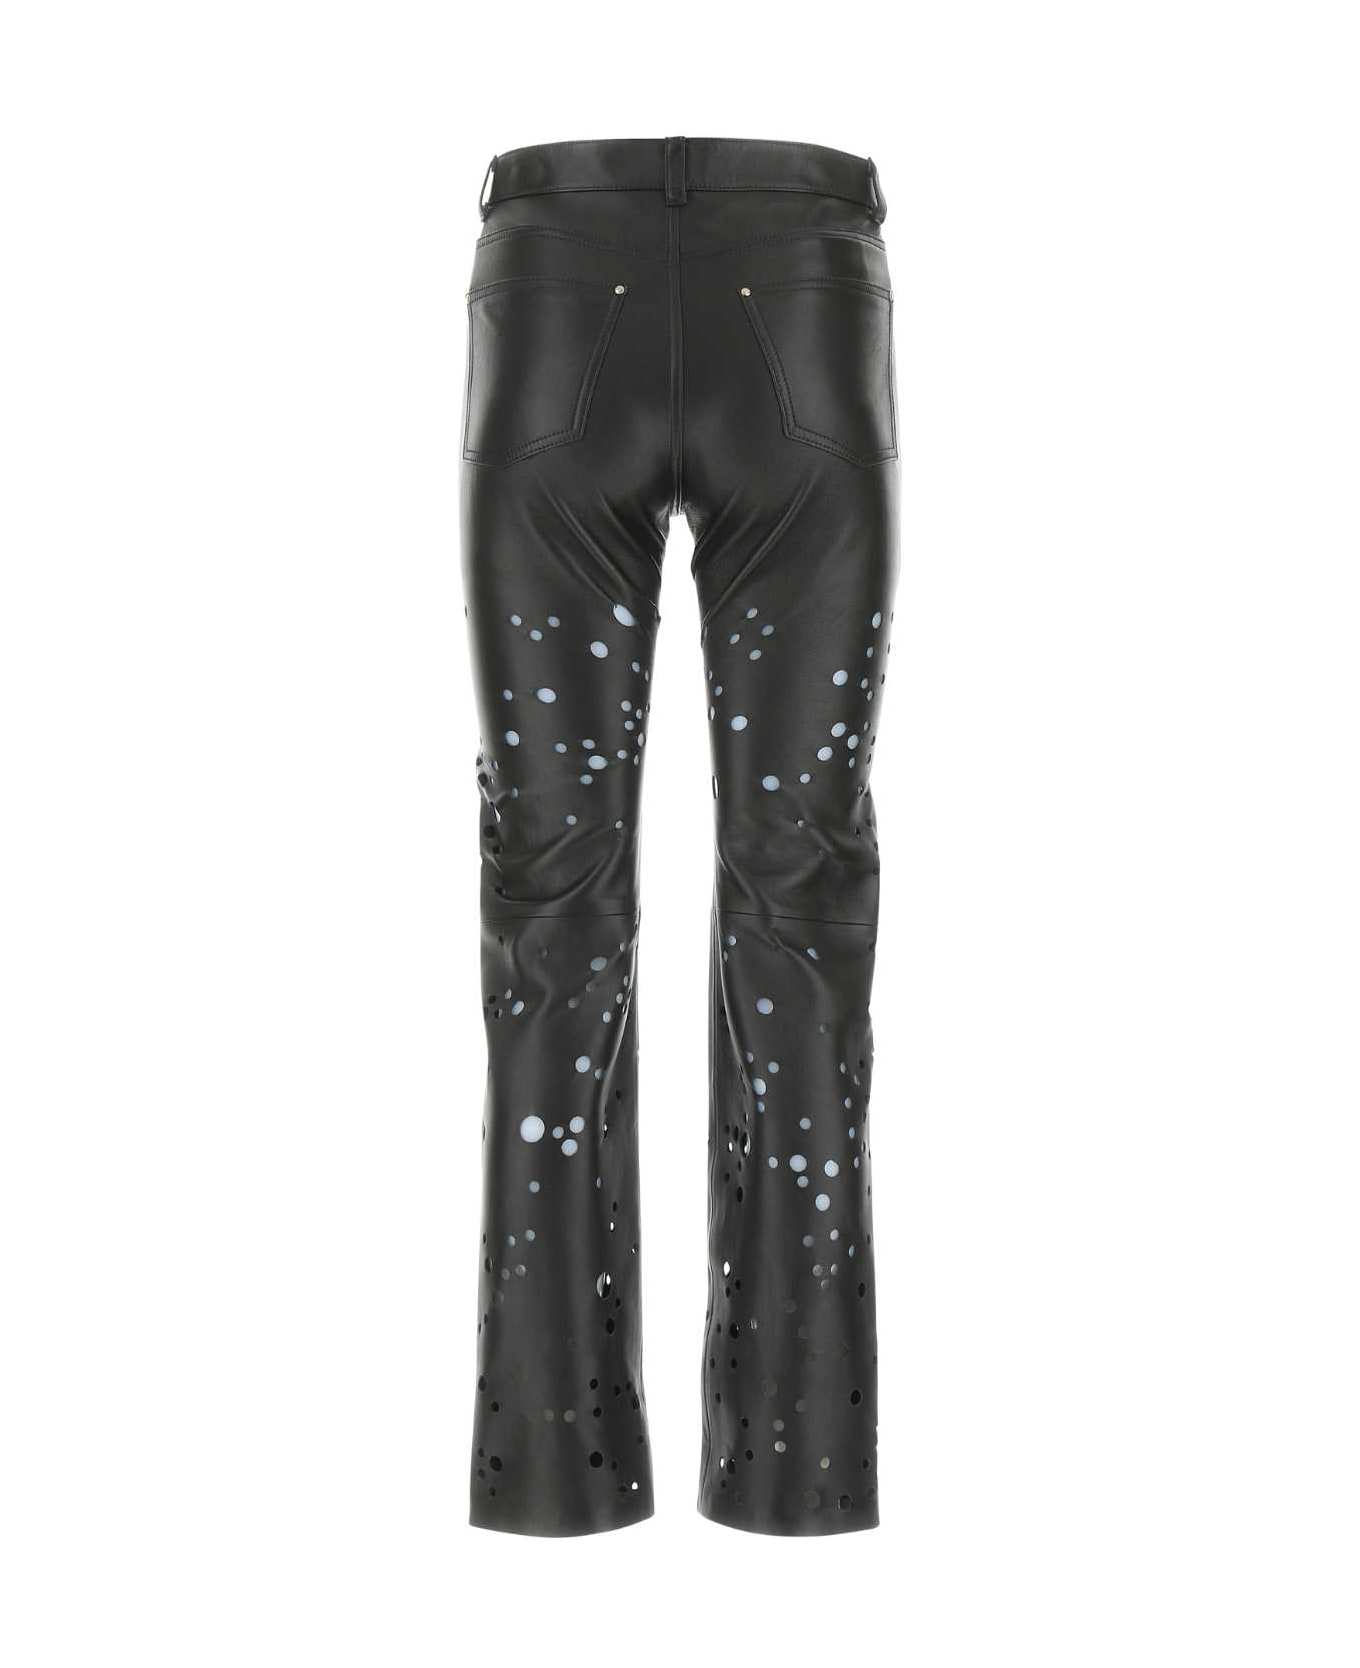 Durazzi Milano Black Leather Pant - BLACK